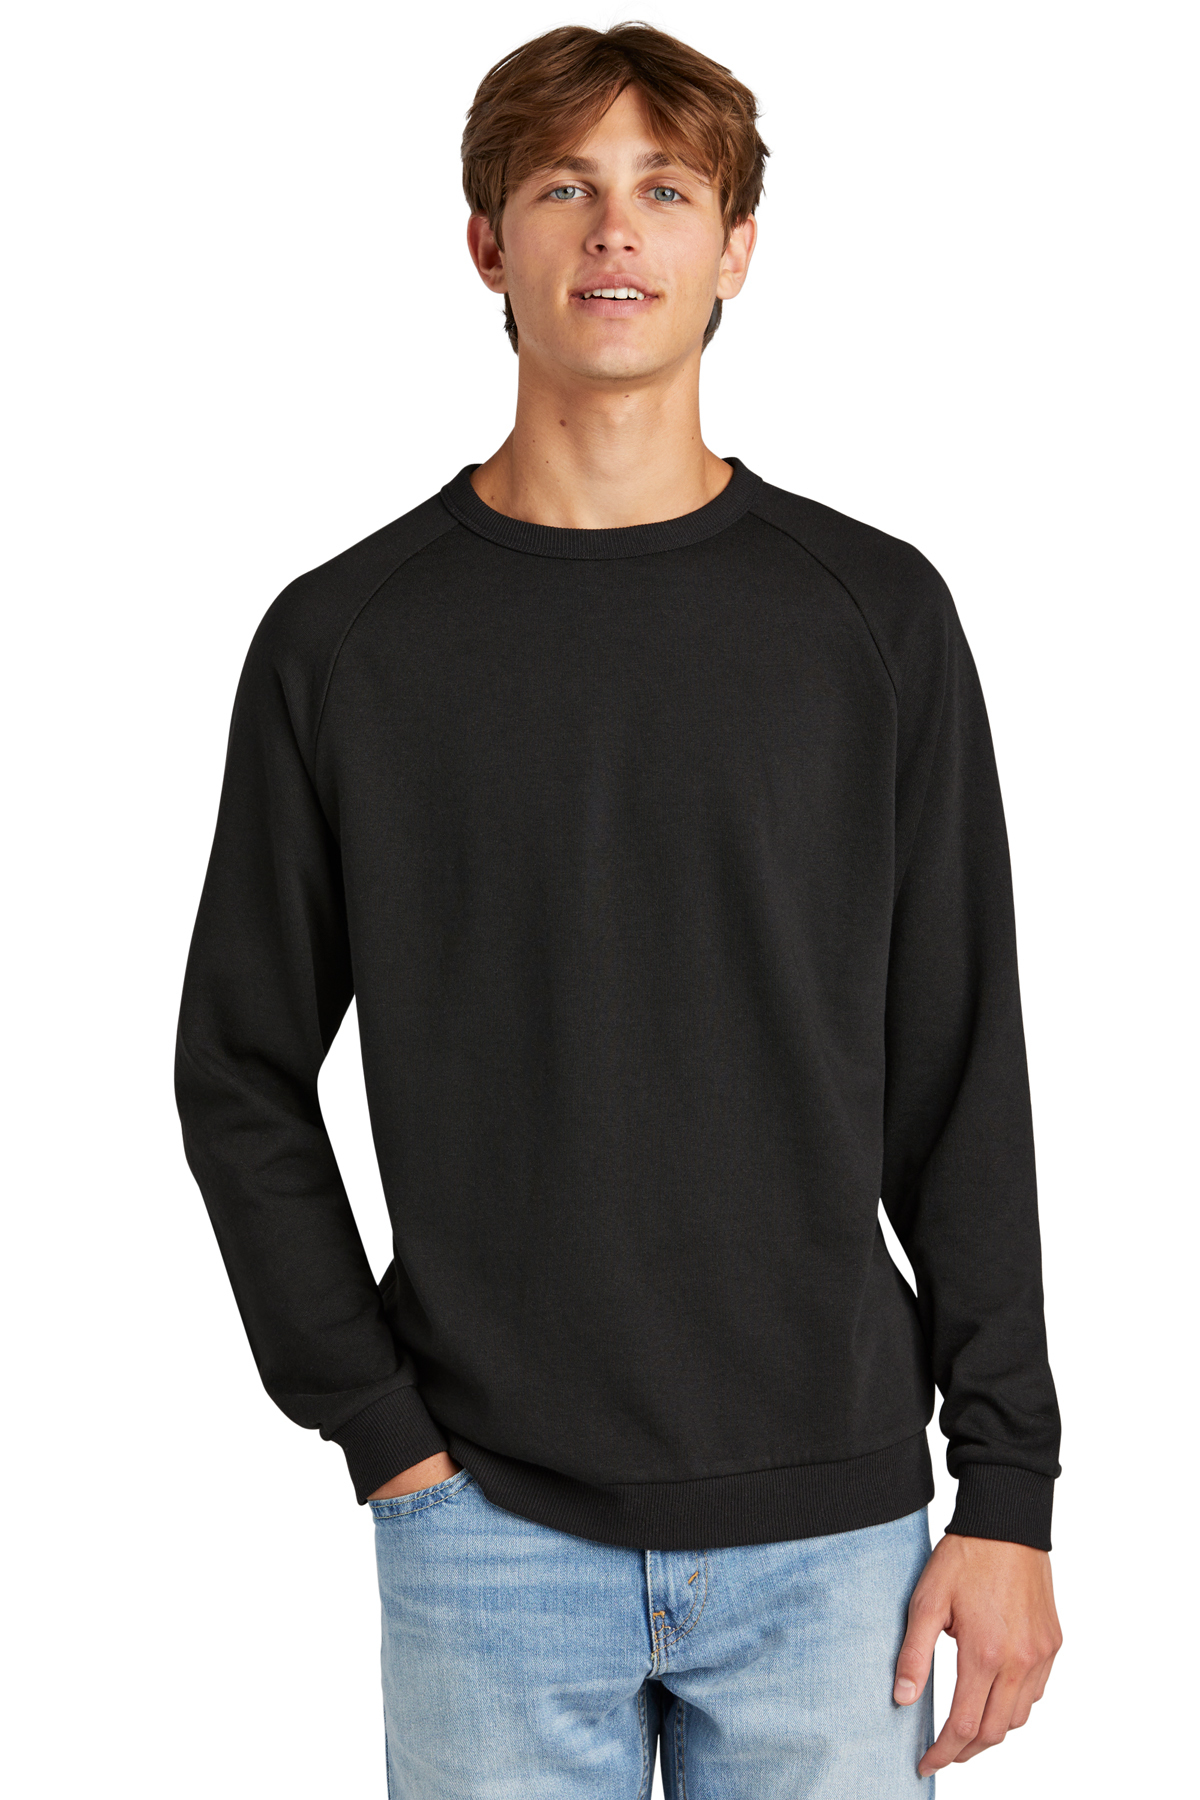 District® Perfect Tri® Fleece Crewneck Sweatshirt